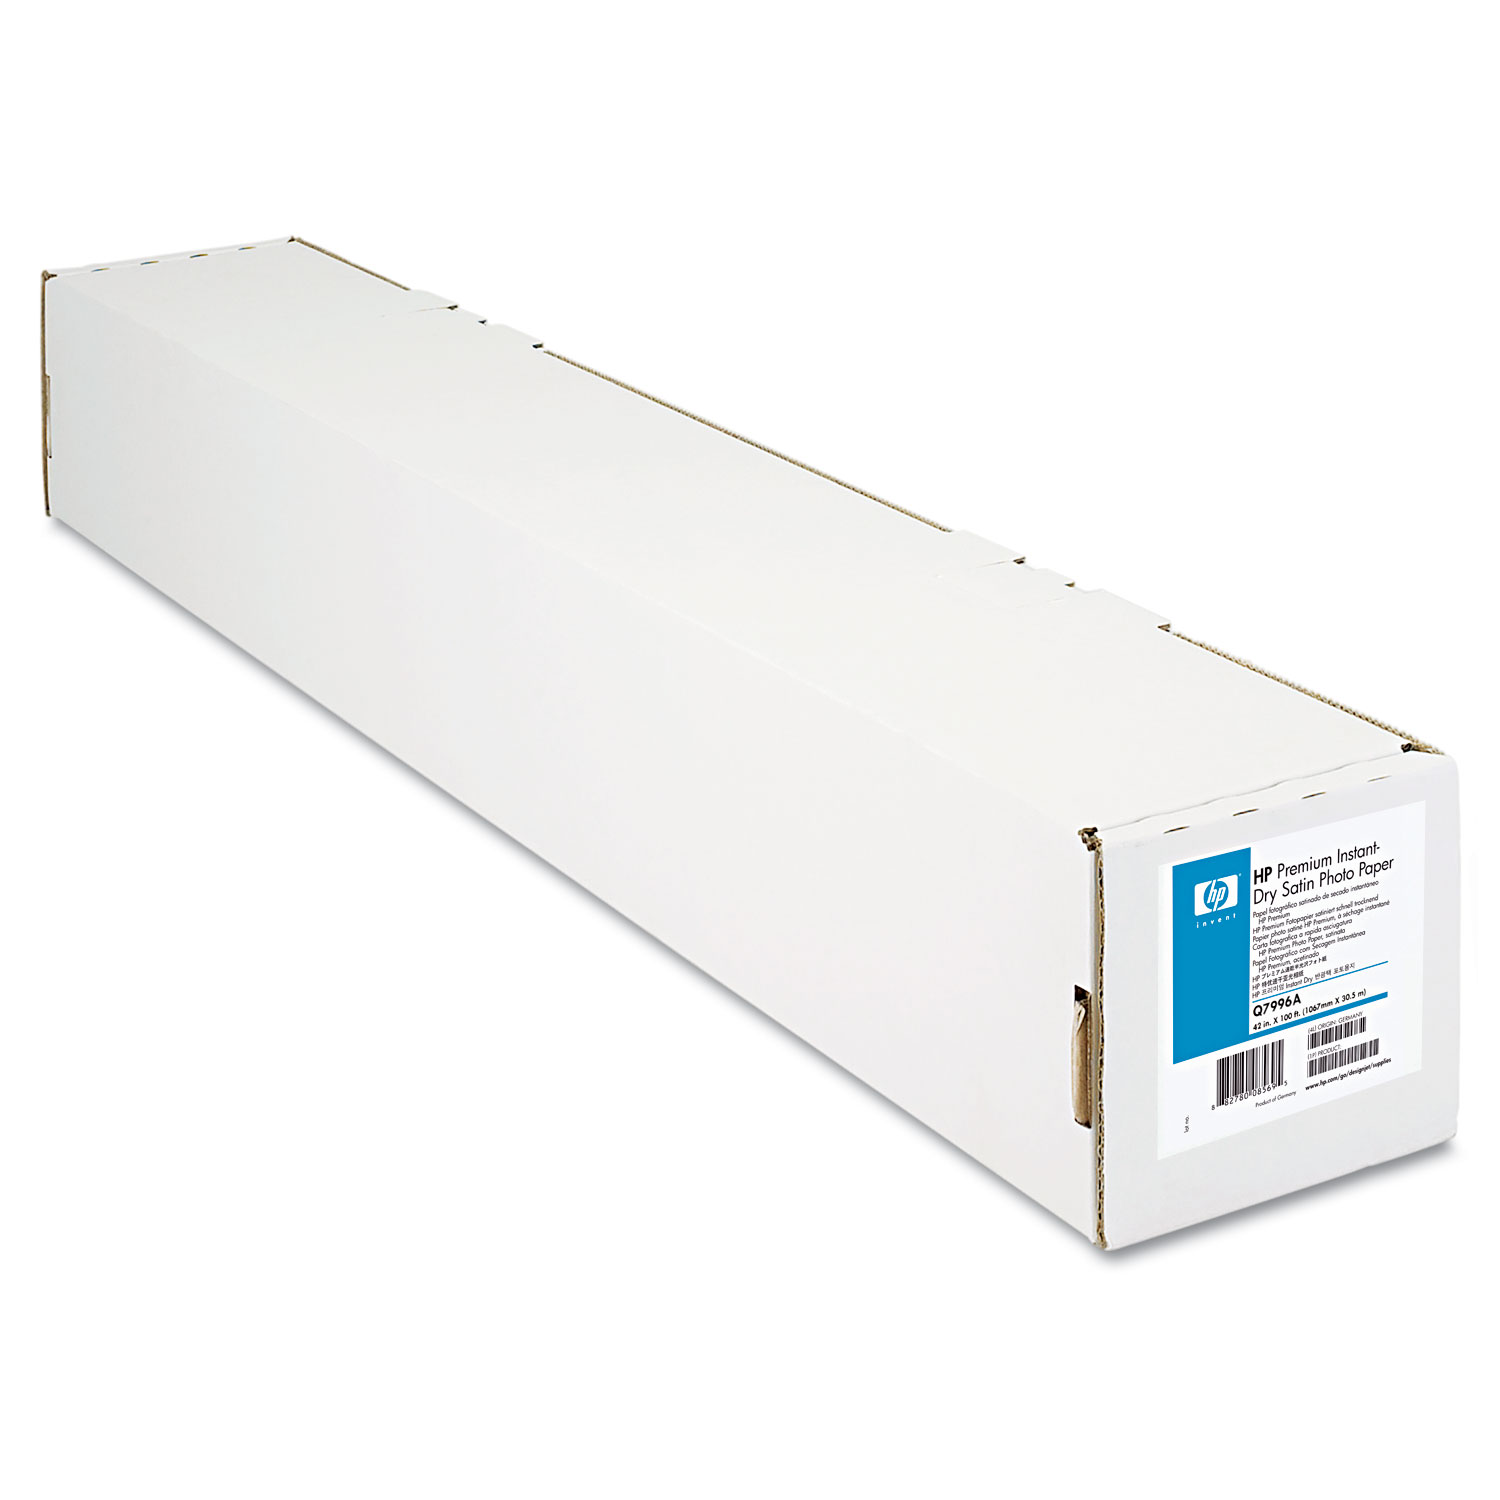  HP Q7996A Premium Instant-Dry Photo Paper, 42 x 100 ft, Satin White (HEWQ7996A) 